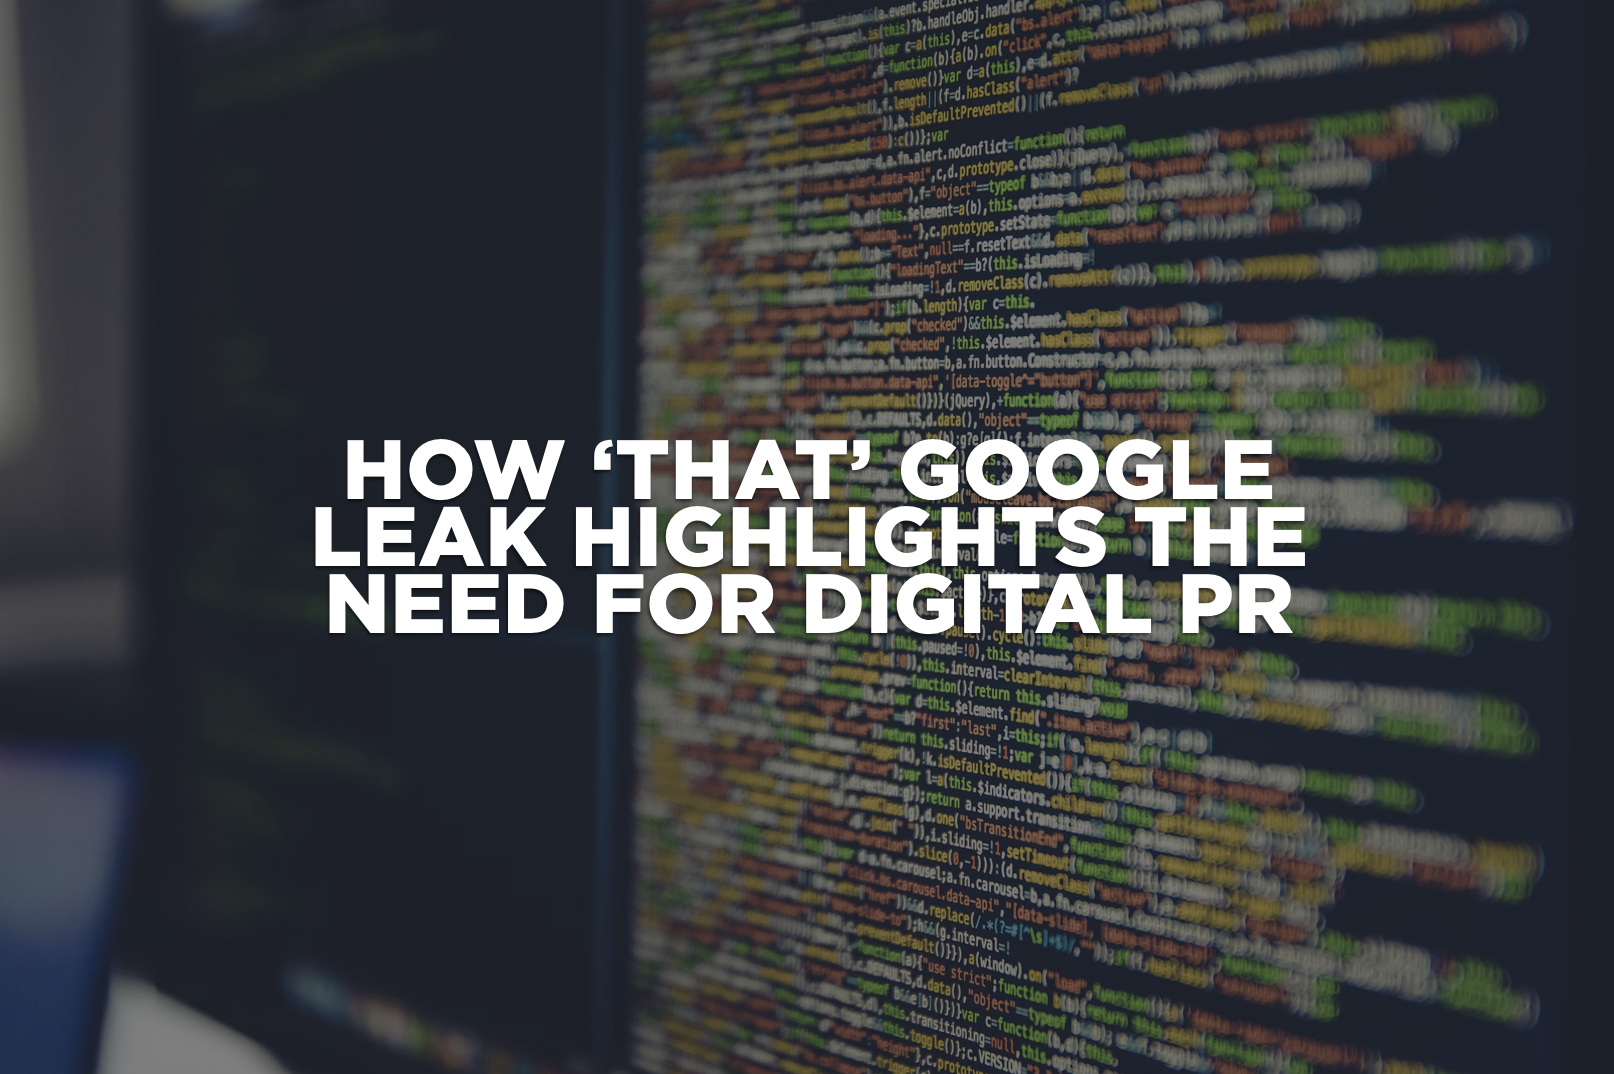 Google Leak Highlights need for Digital PR